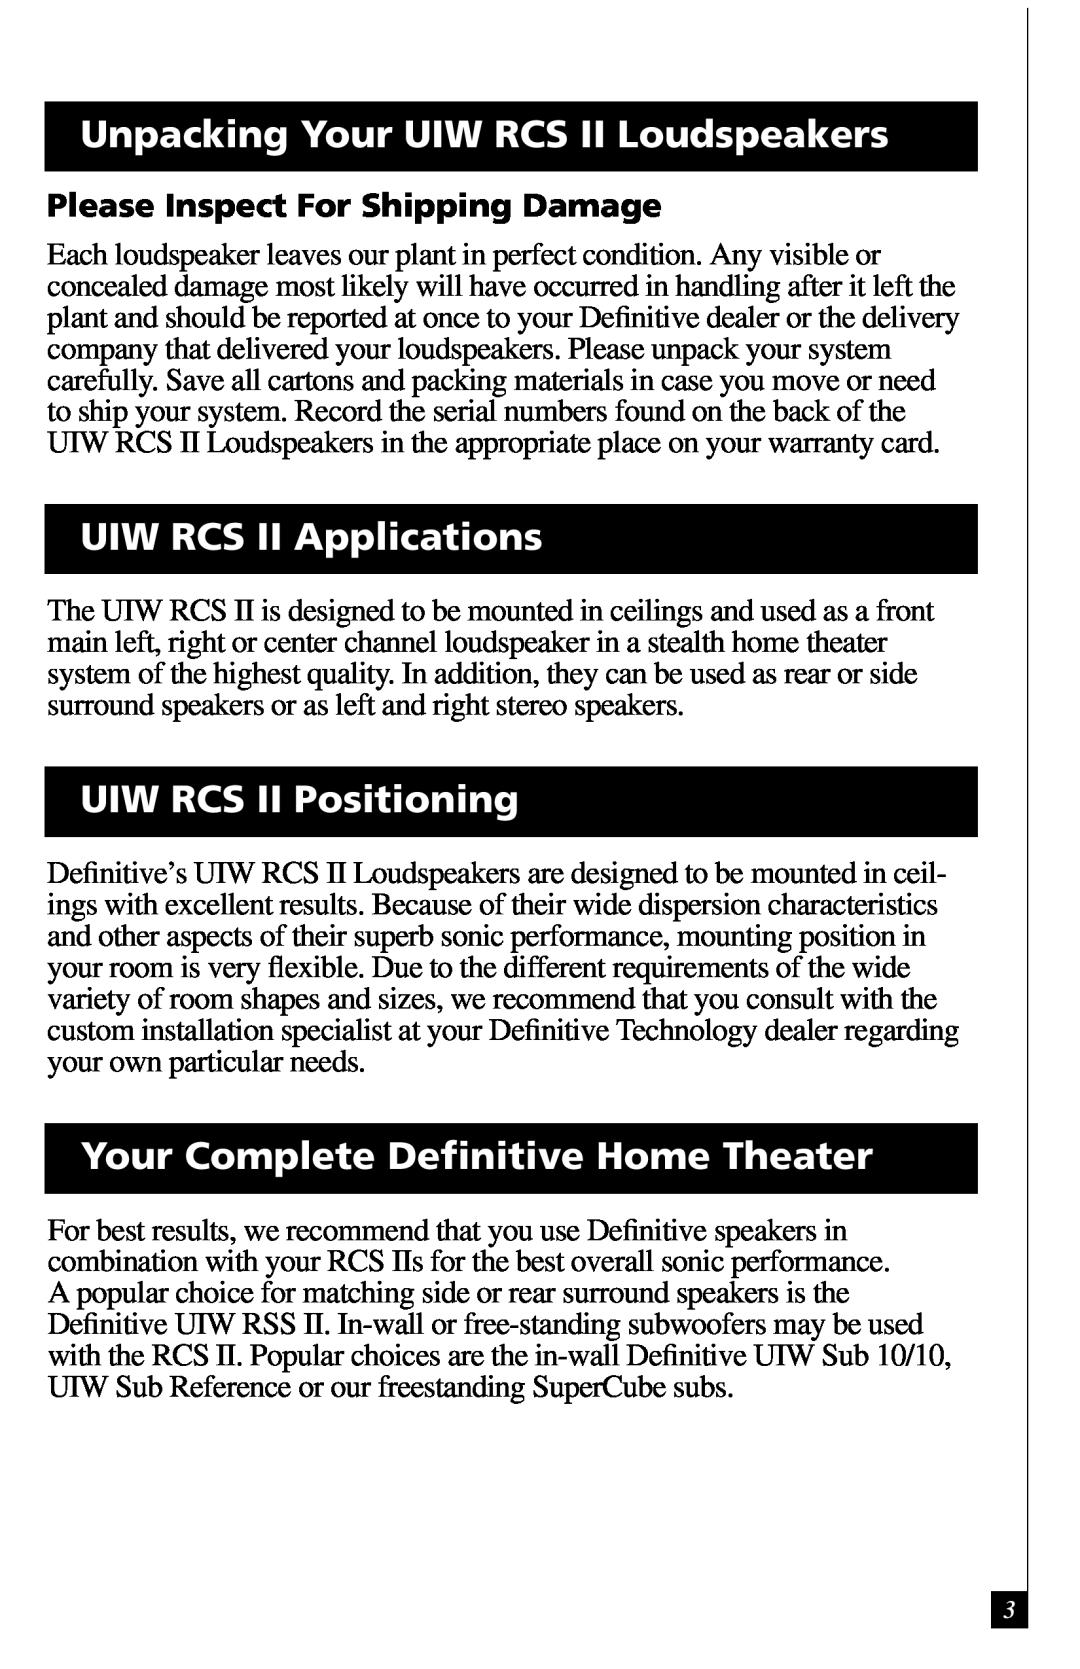 Definitive Technology Unpacking Your UIW RCS II Loudspeakers, UIW RCS II Applications, UIW RCS II Positioning 